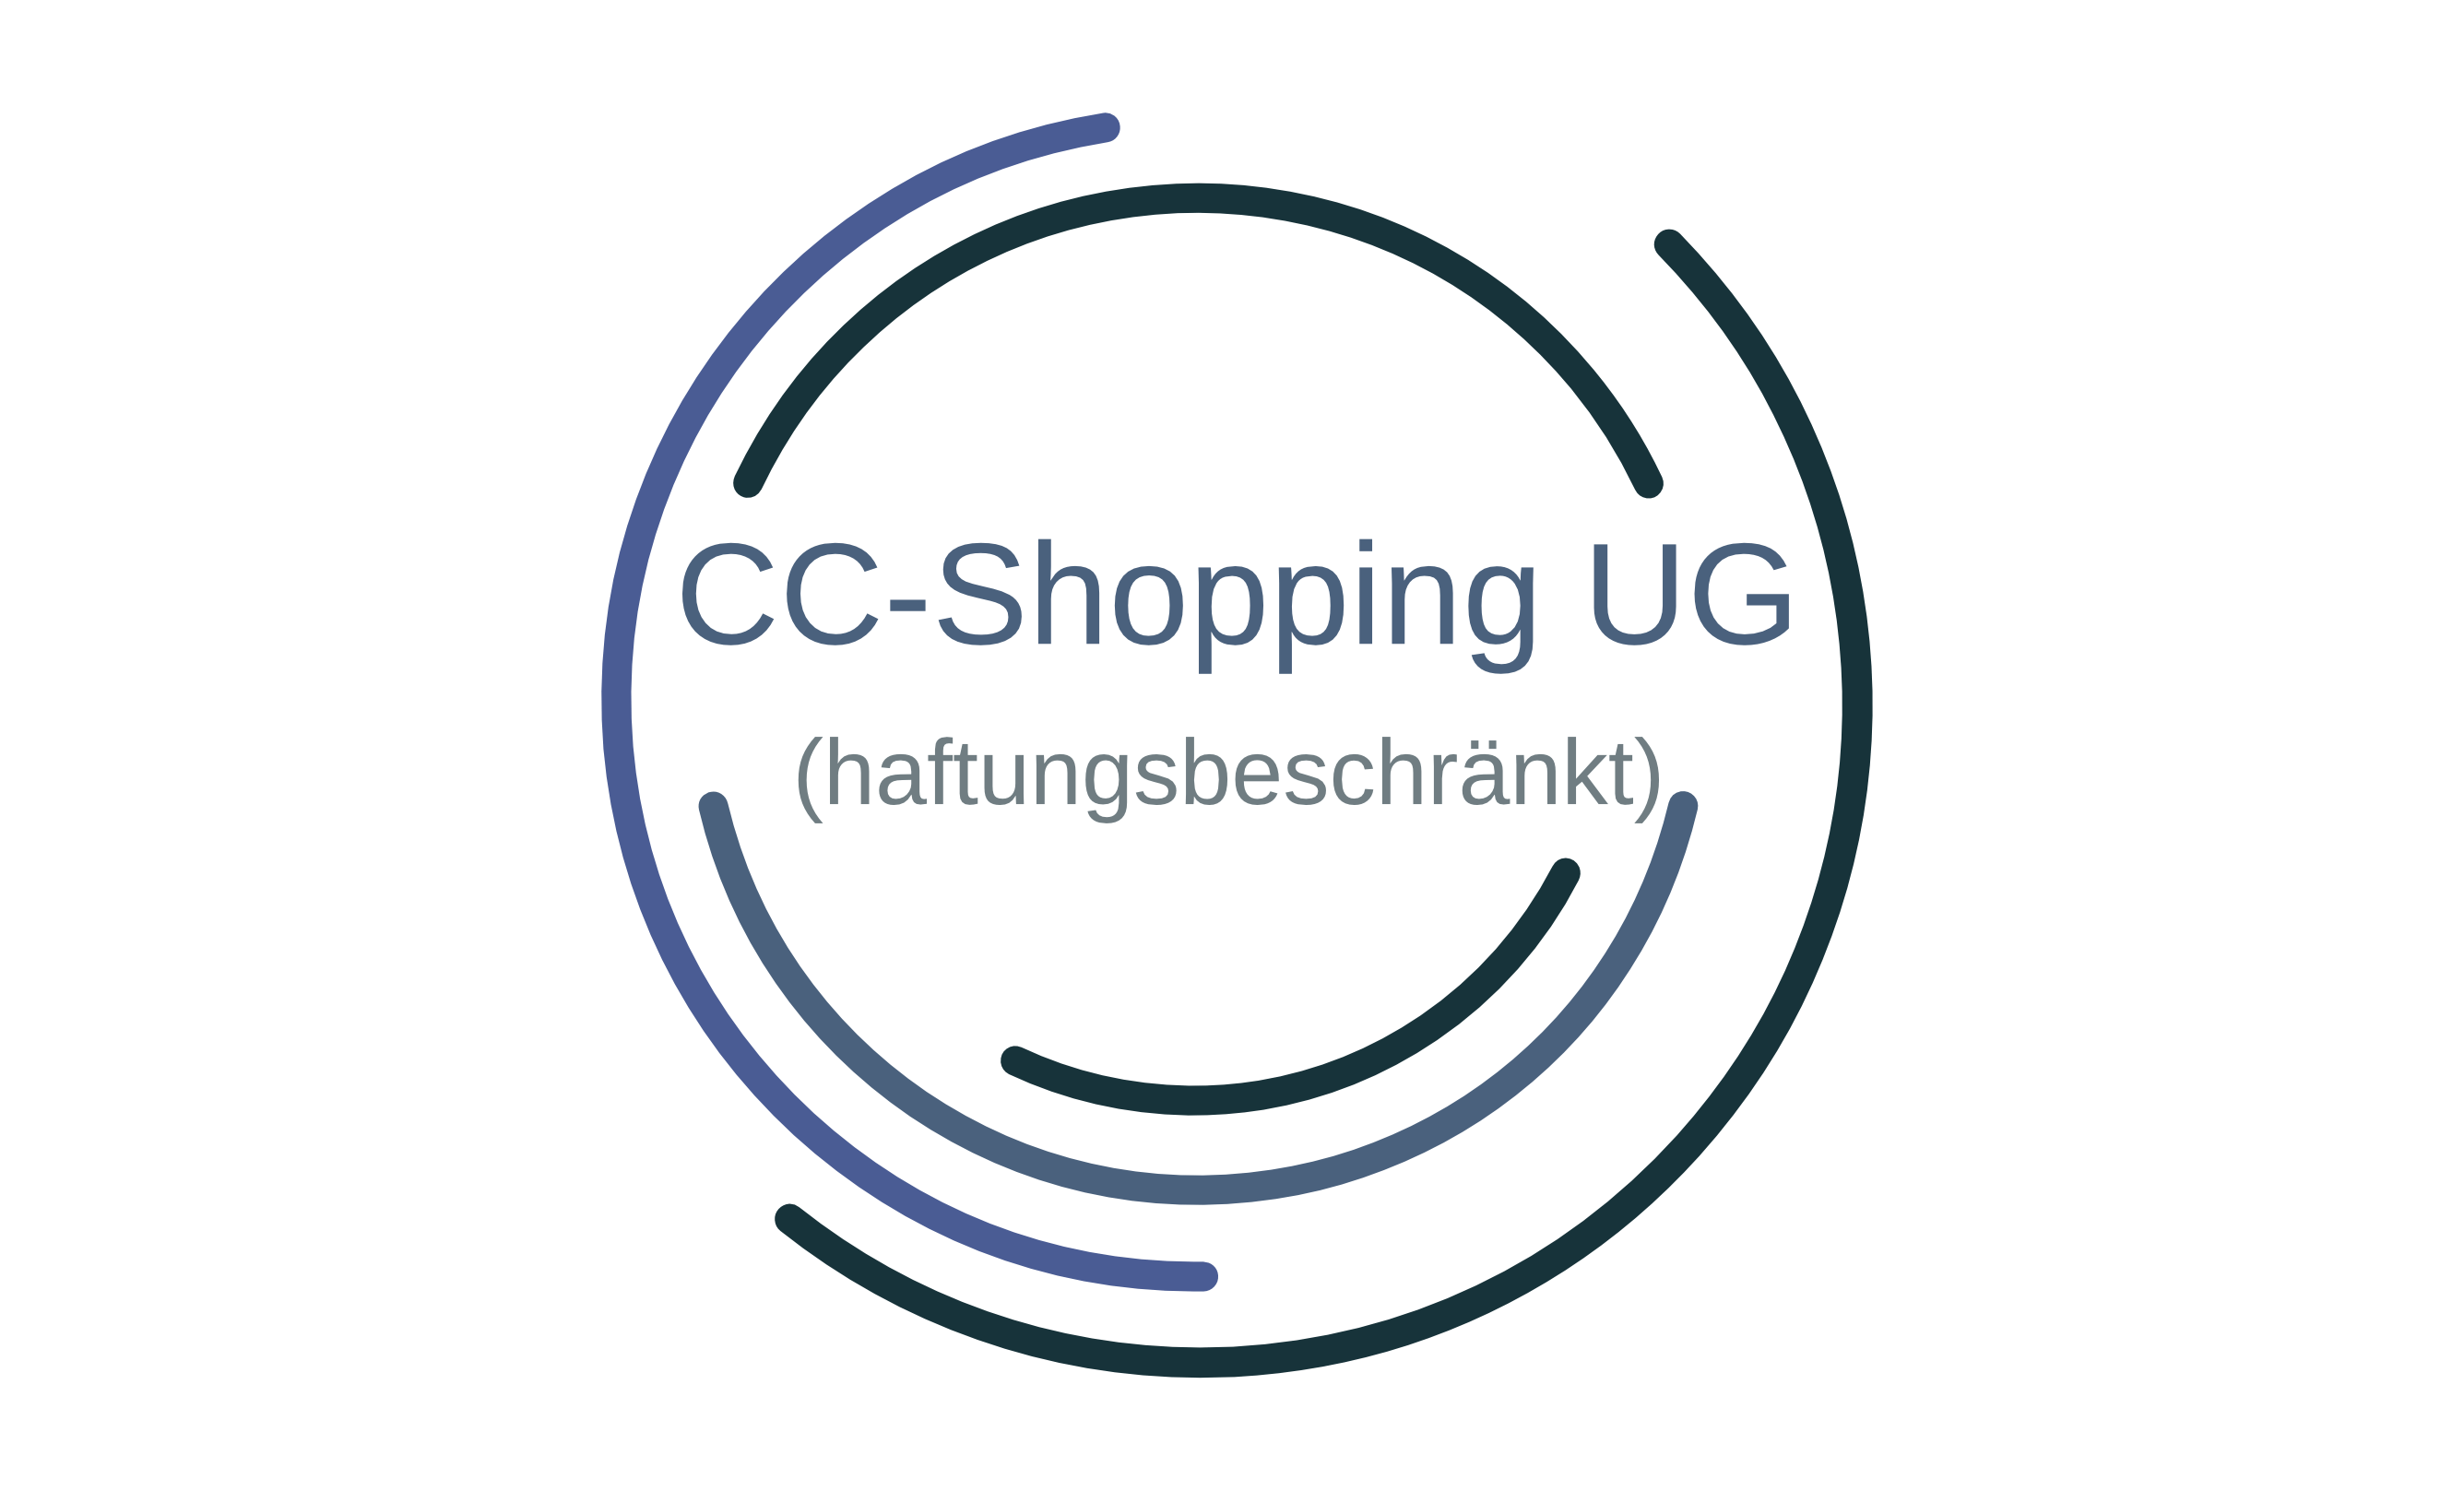 CC-Shopping